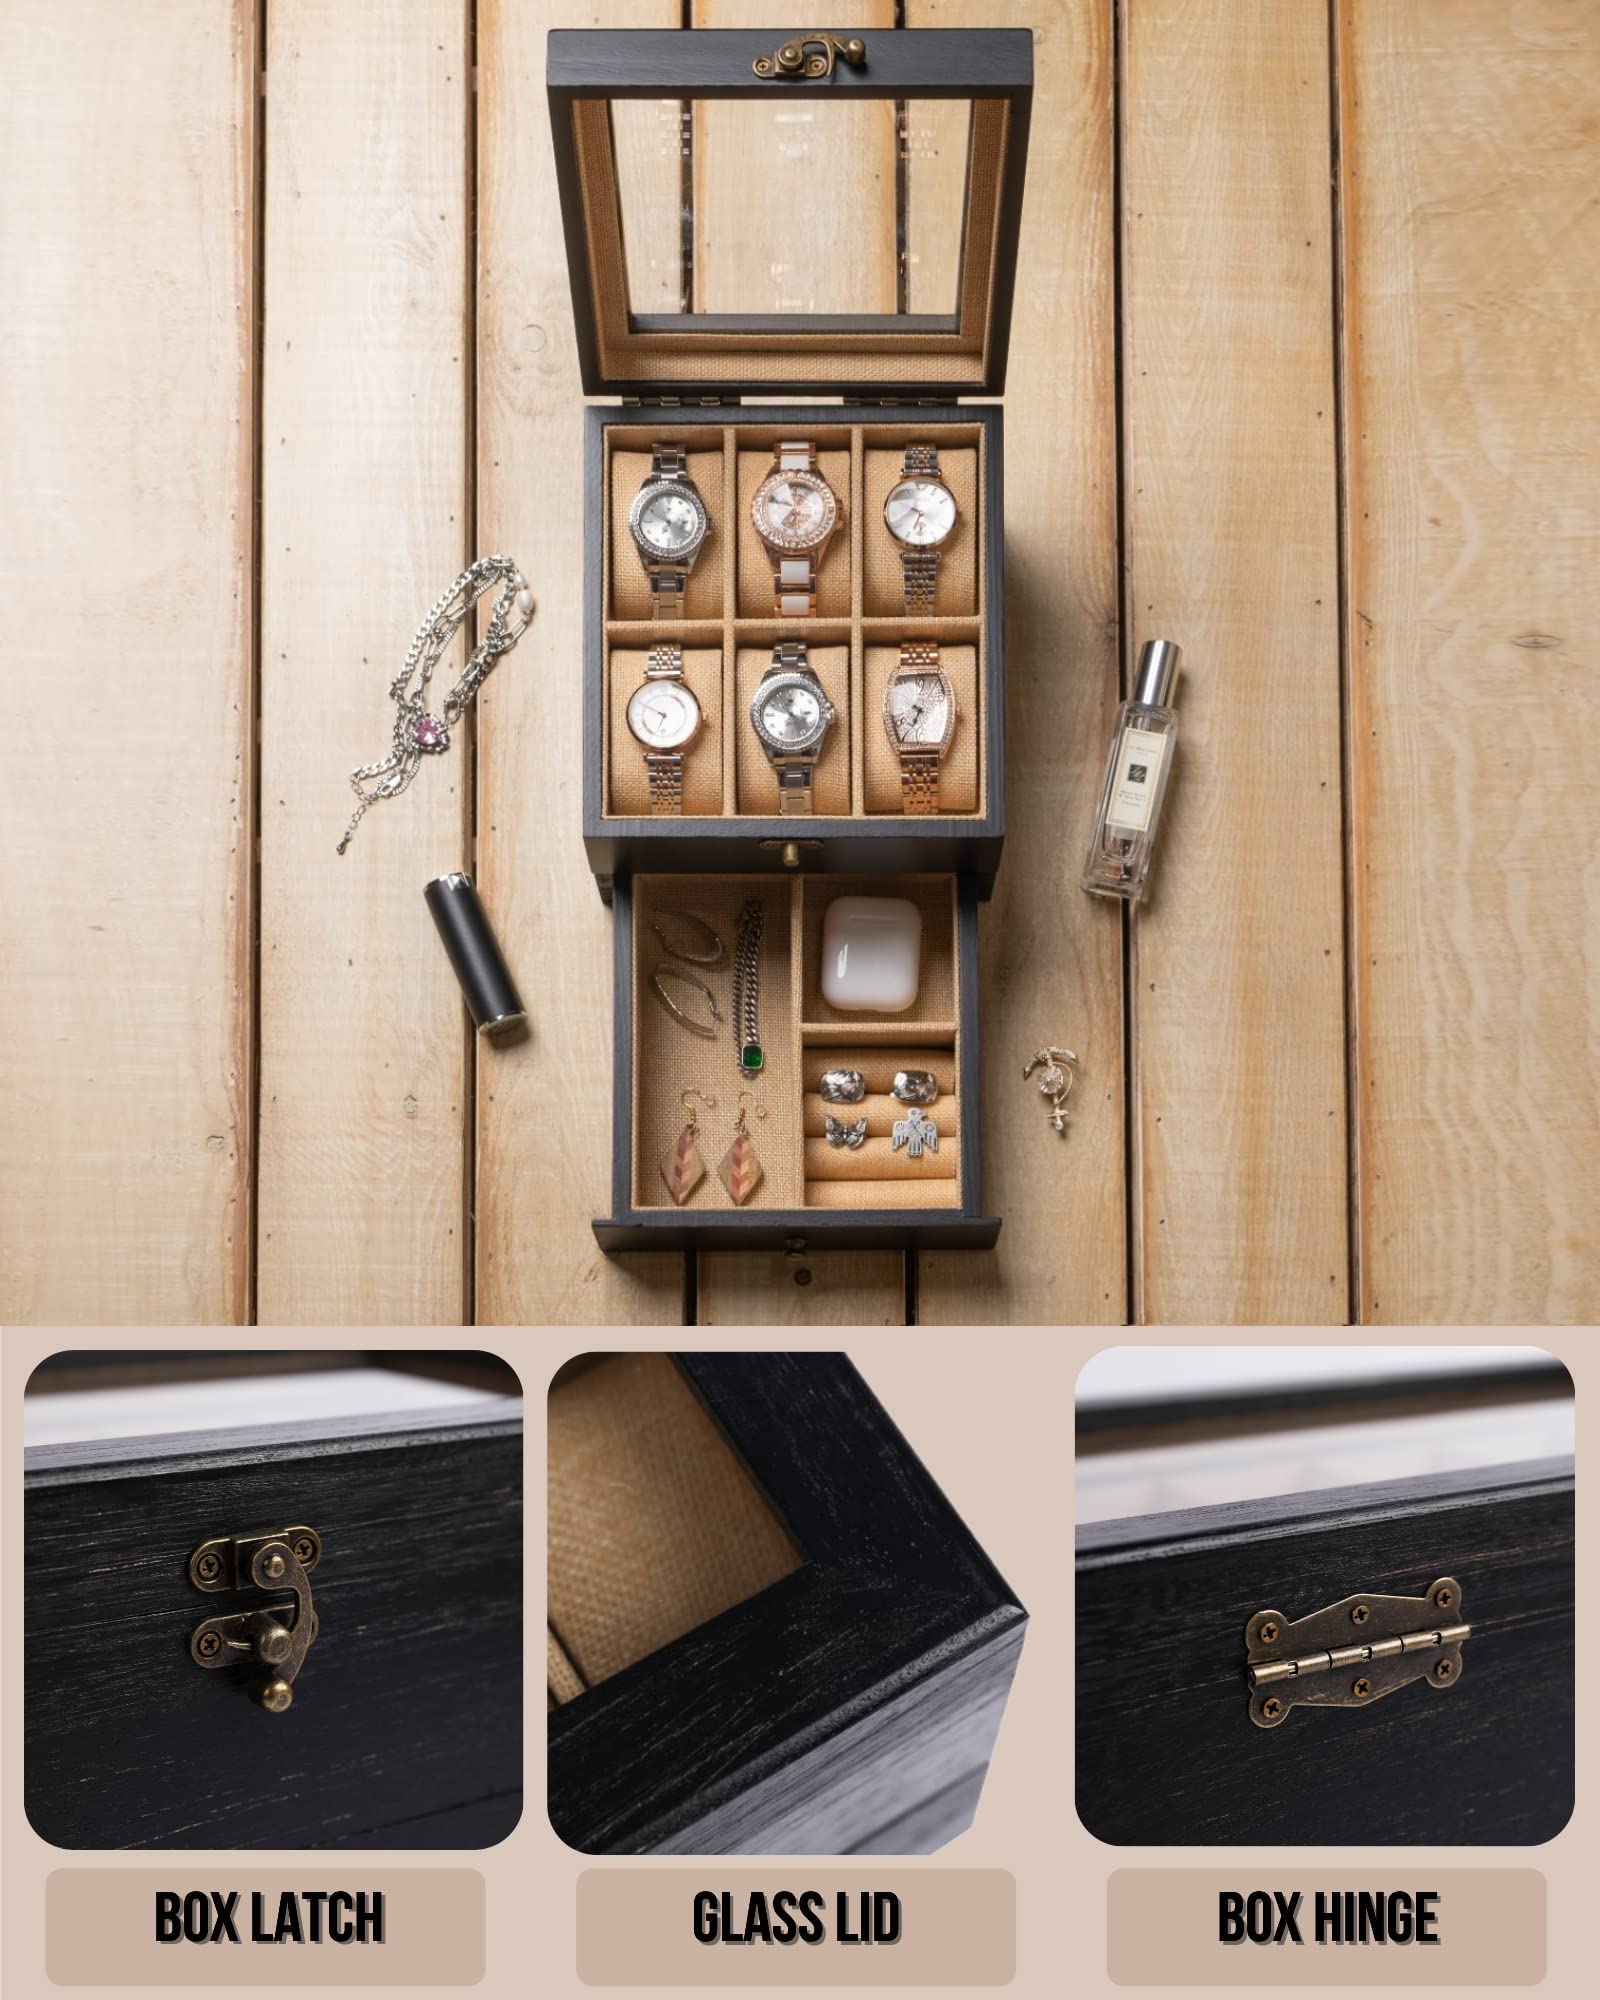 Exper City Watch Box Case Organizer Display Storage with Jewelry Drawer for Men Women Gift, Black Burlywood C46XVF6X 9S61W35D